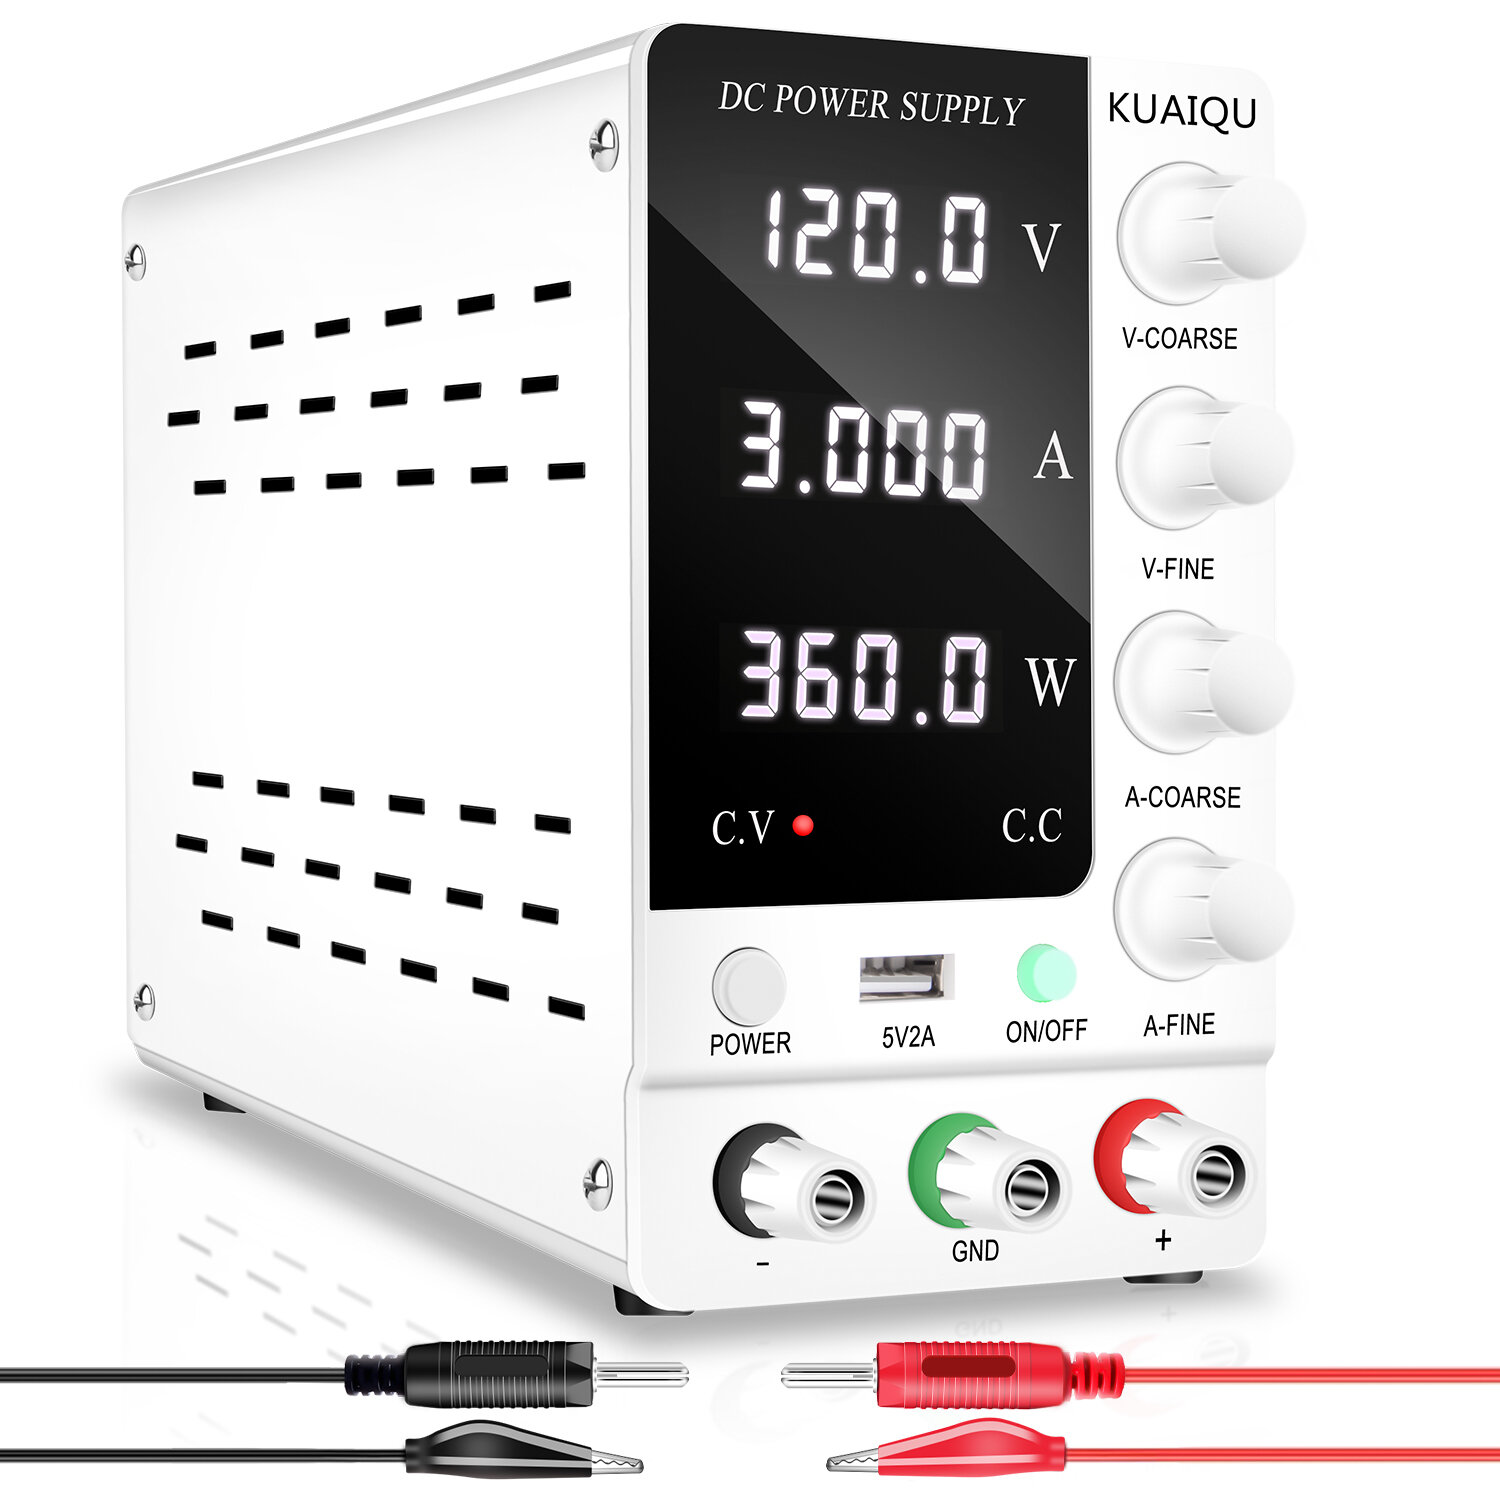 

KUAIQU SPS-C1203 USB 120V 3A Adjustable DC Laboratory Power Supply Bench Source Digital Voltage Regulator Stabilizer